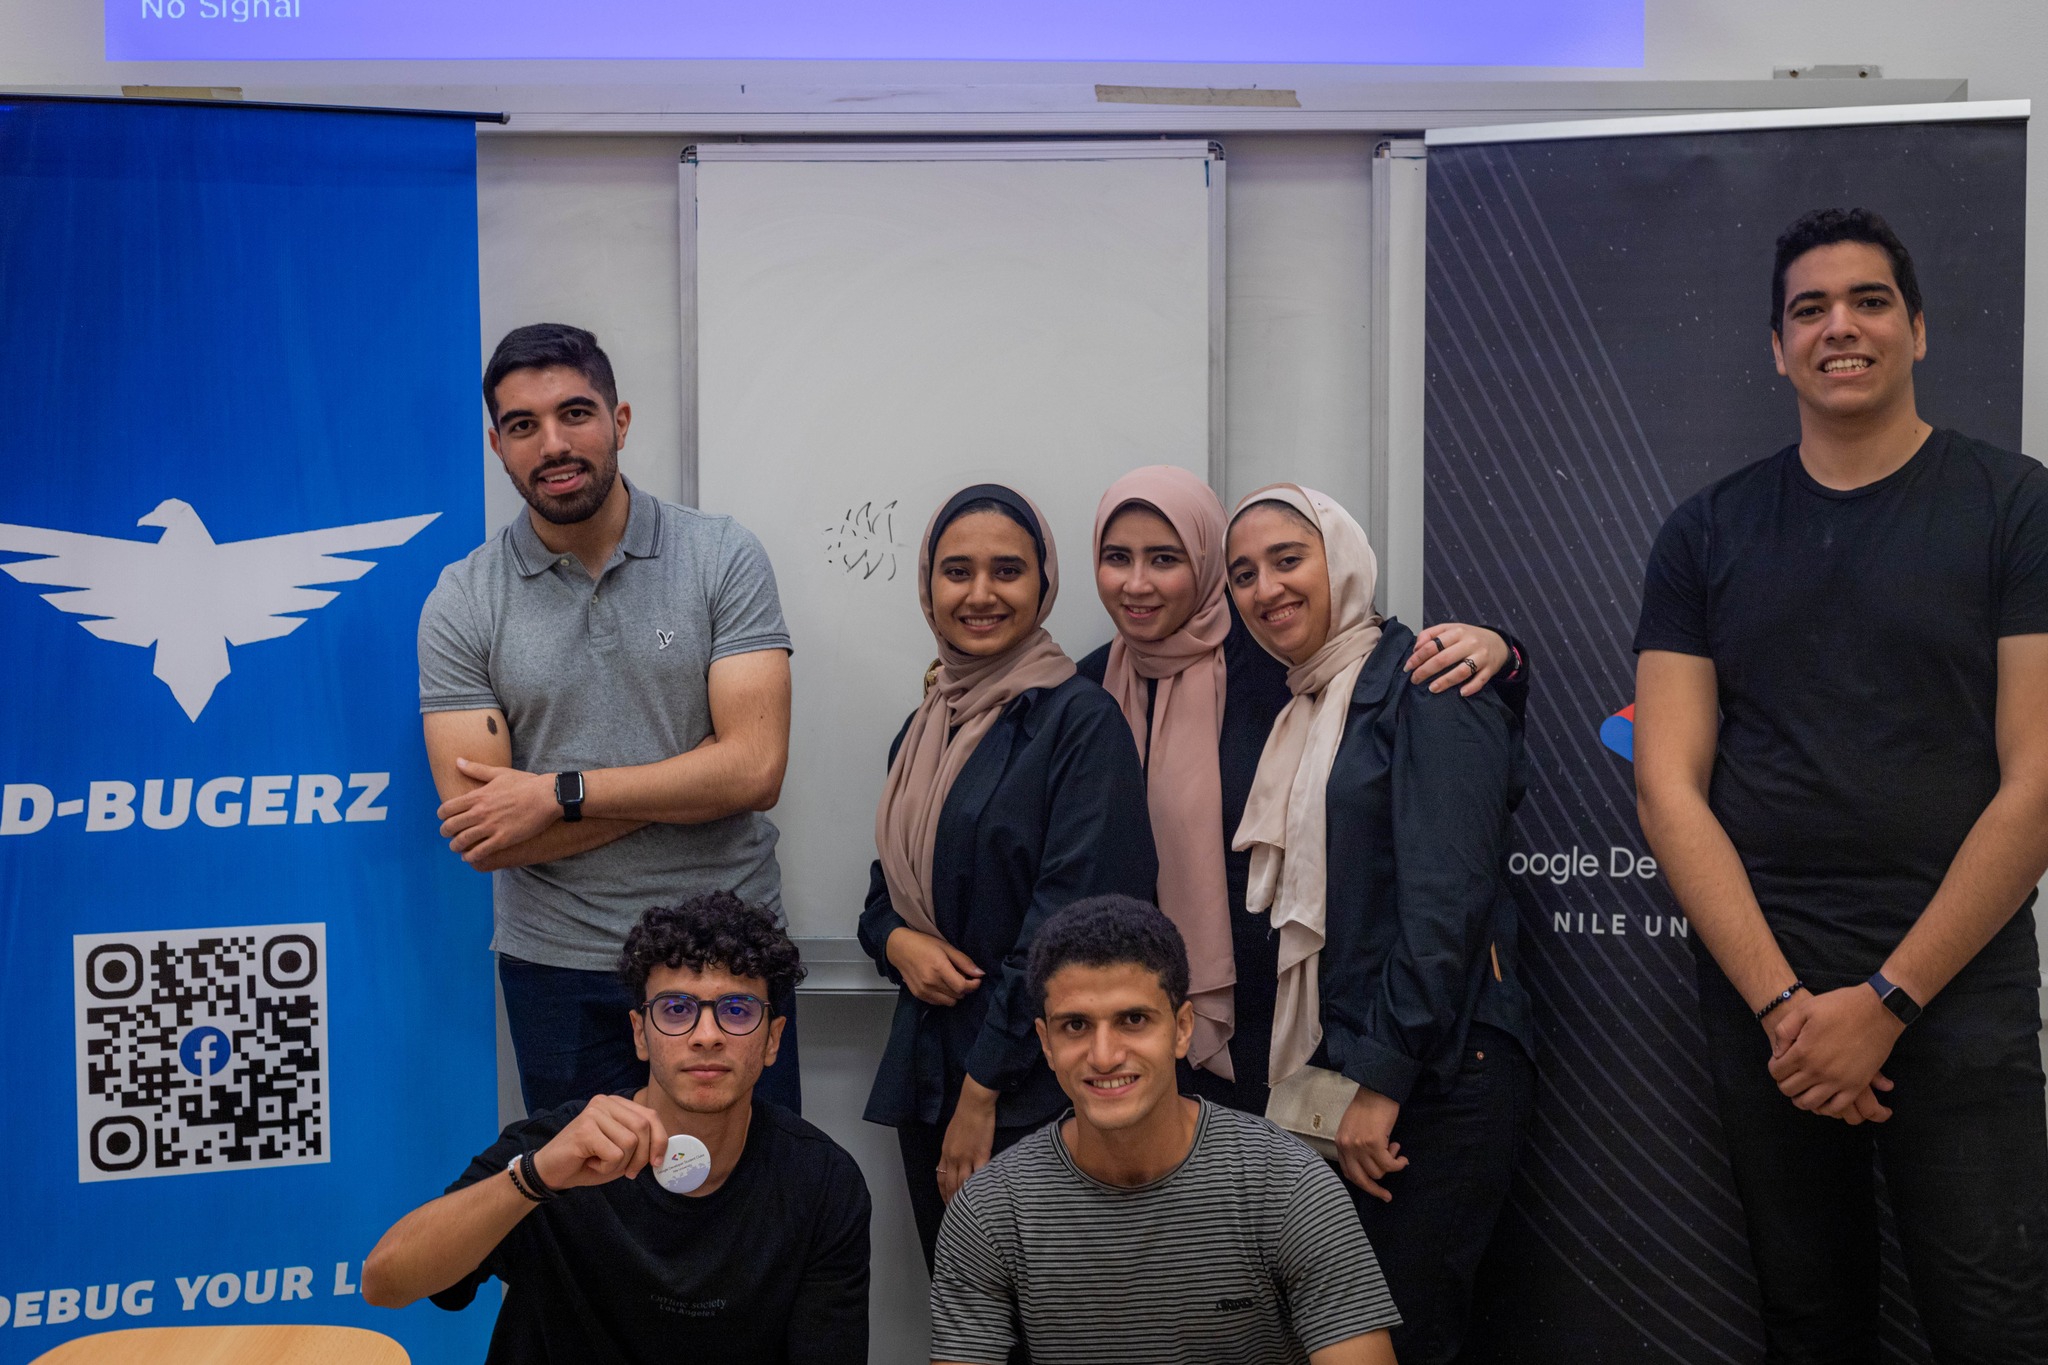 The Google Developer Student Club (GDSC) at Nile University